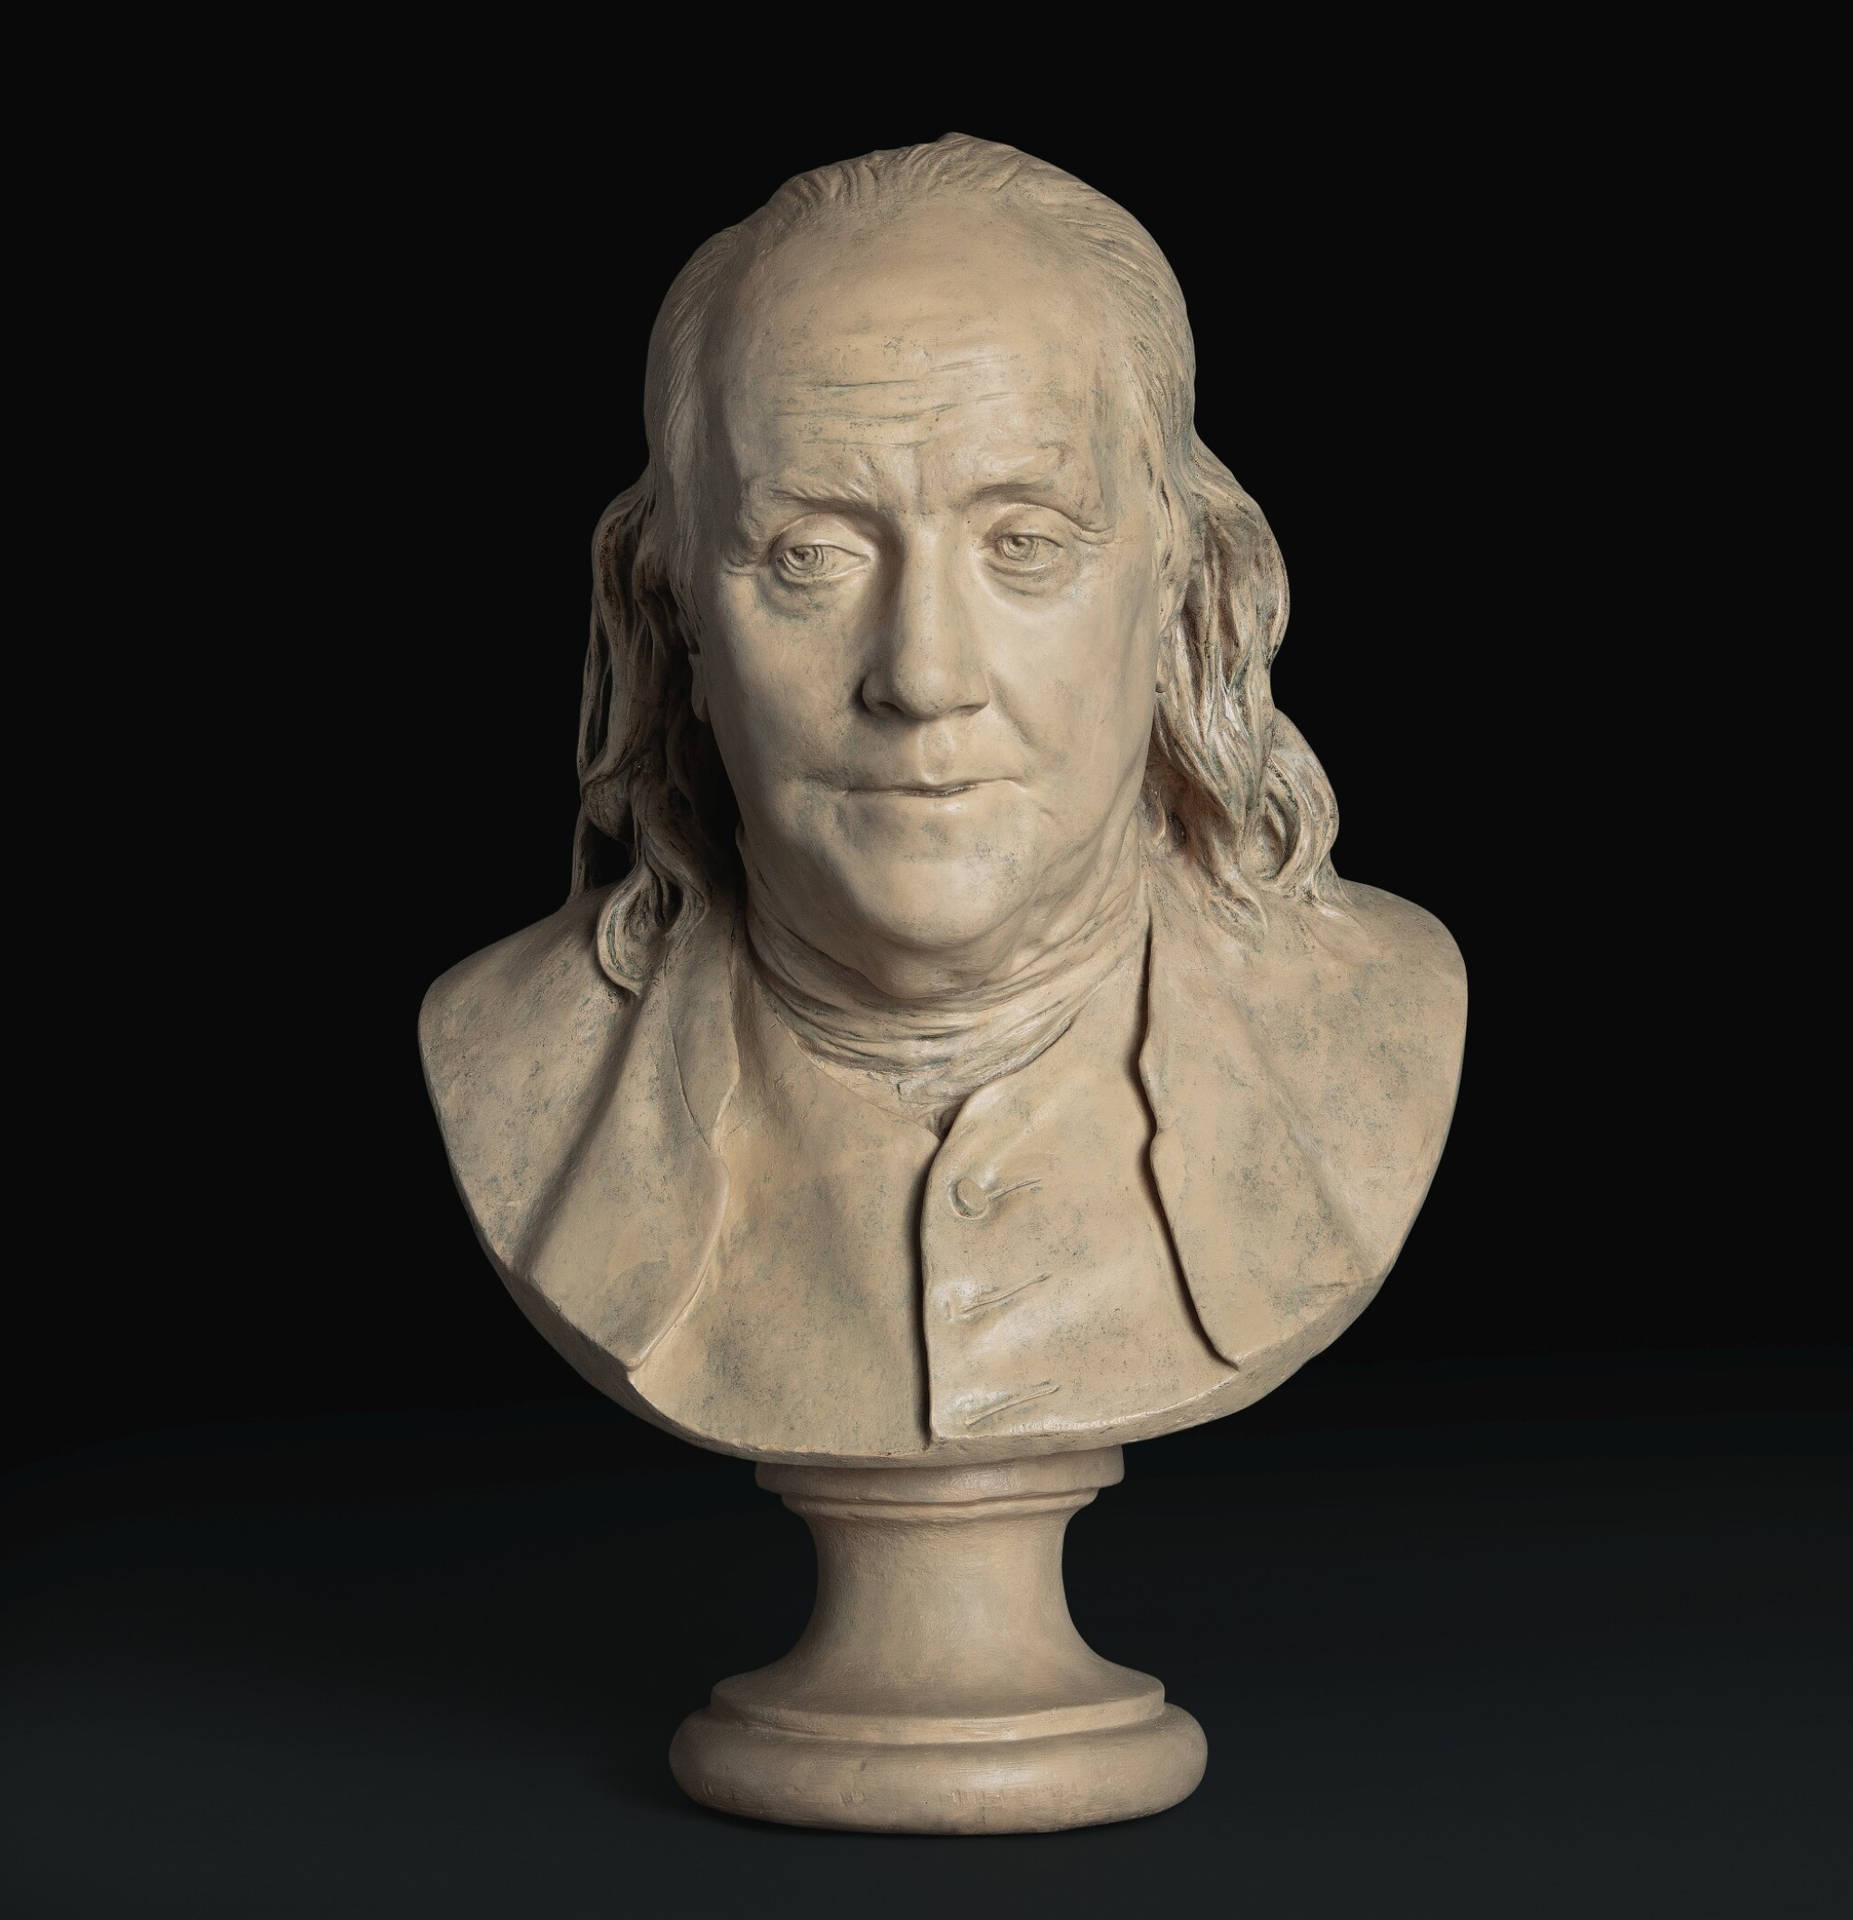 Benjamin Franklin Bust Sculpture Wallpaper